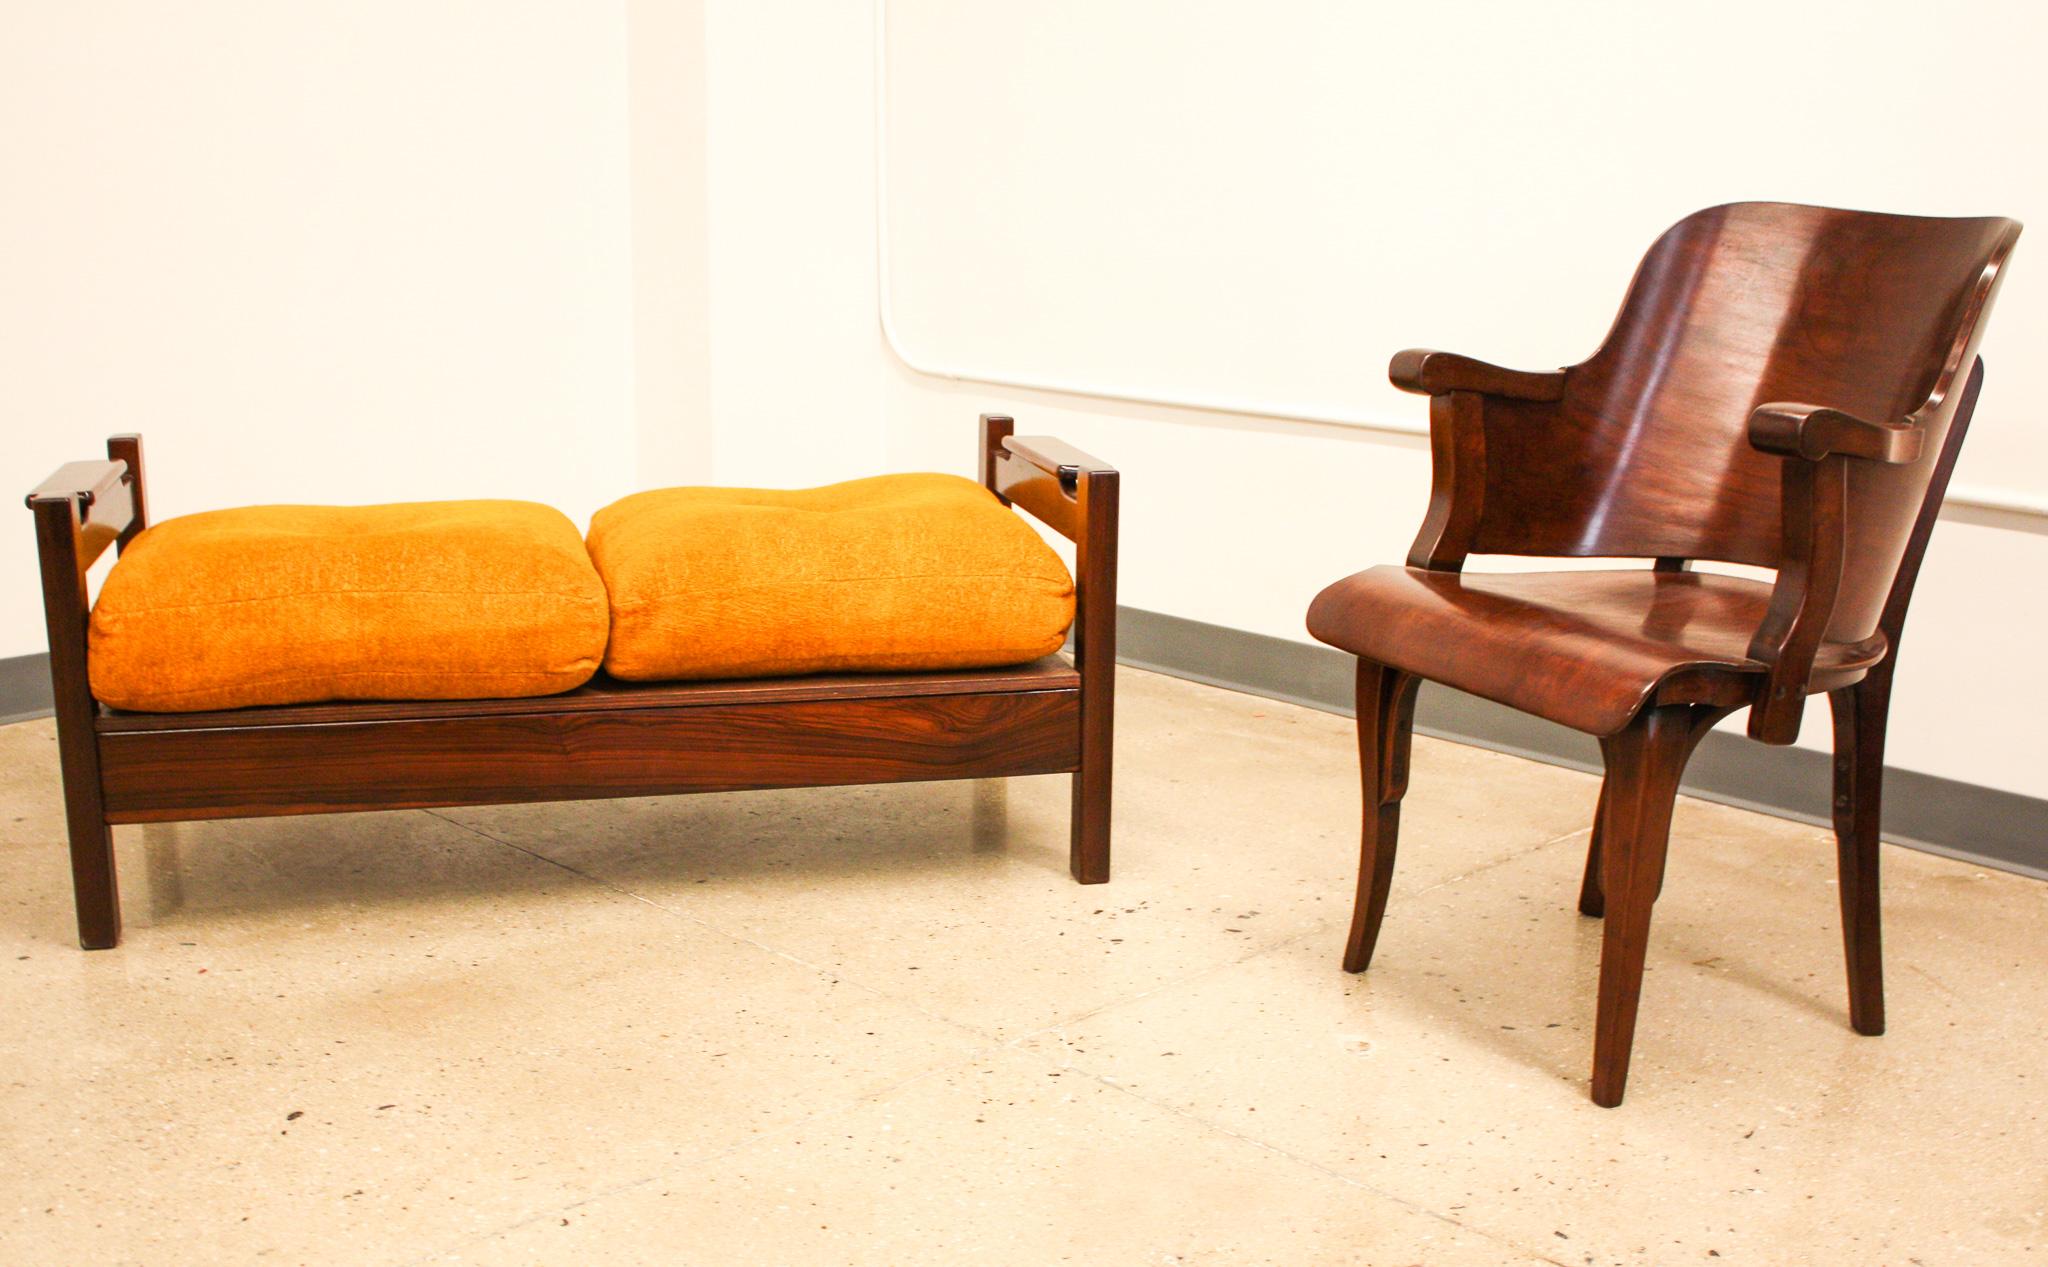 Brazilian Modern Bench in Hardwood & Orange Cushions by Fatima, 1960s, Brazil For Sale 3